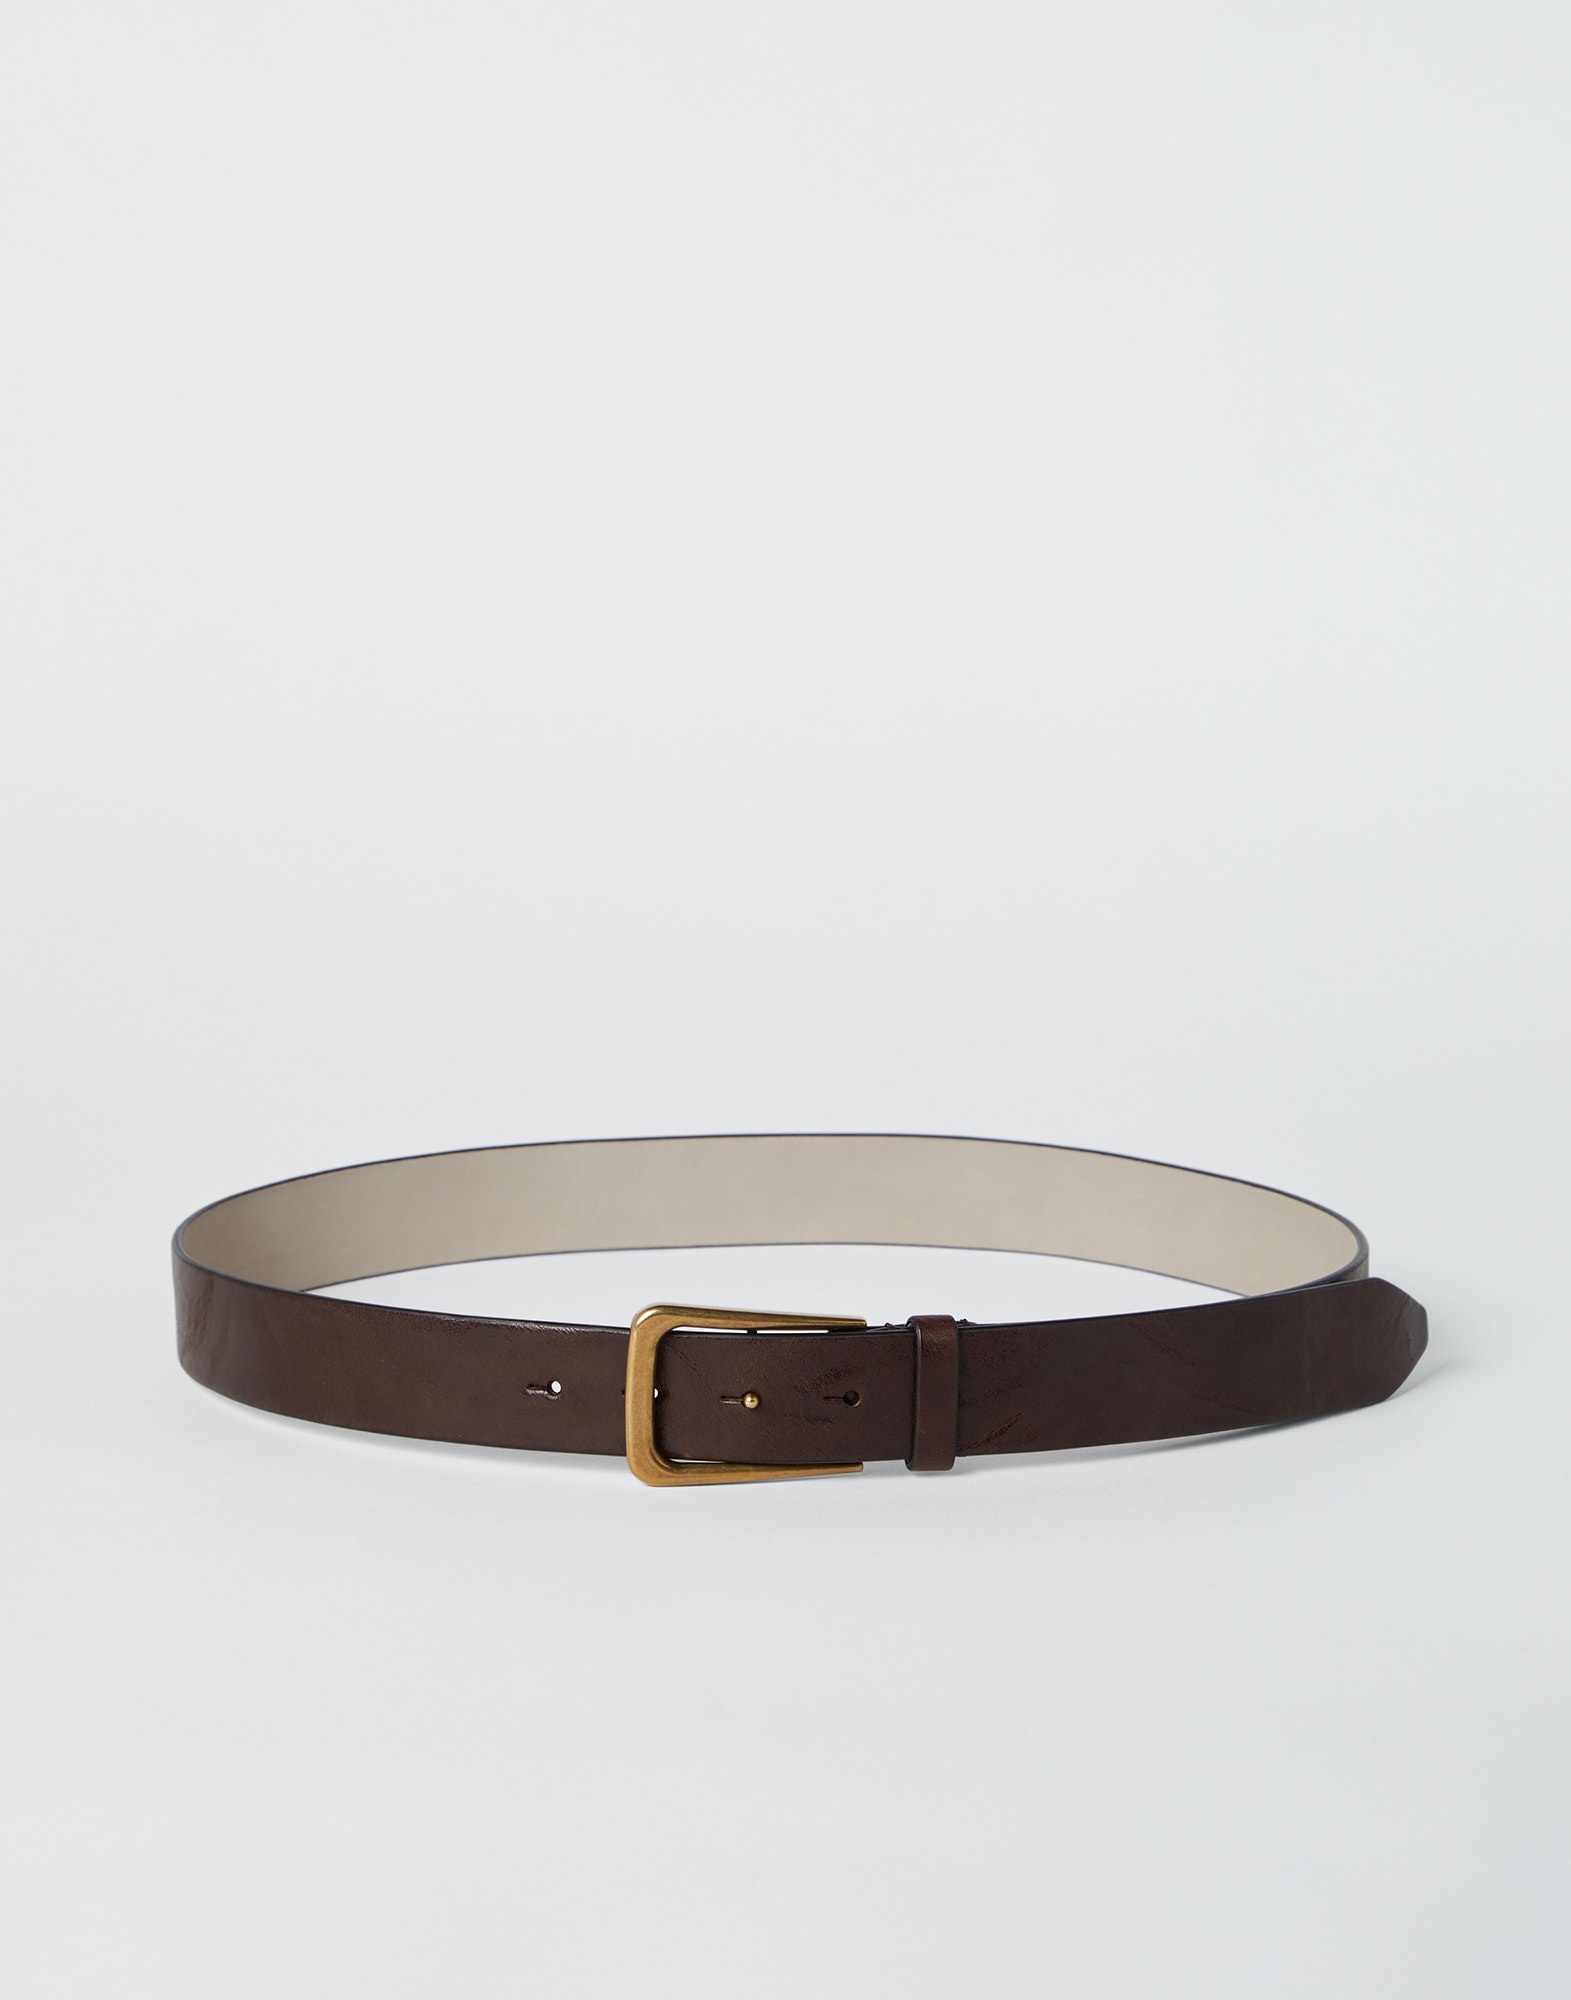 Aged leather belt - 1